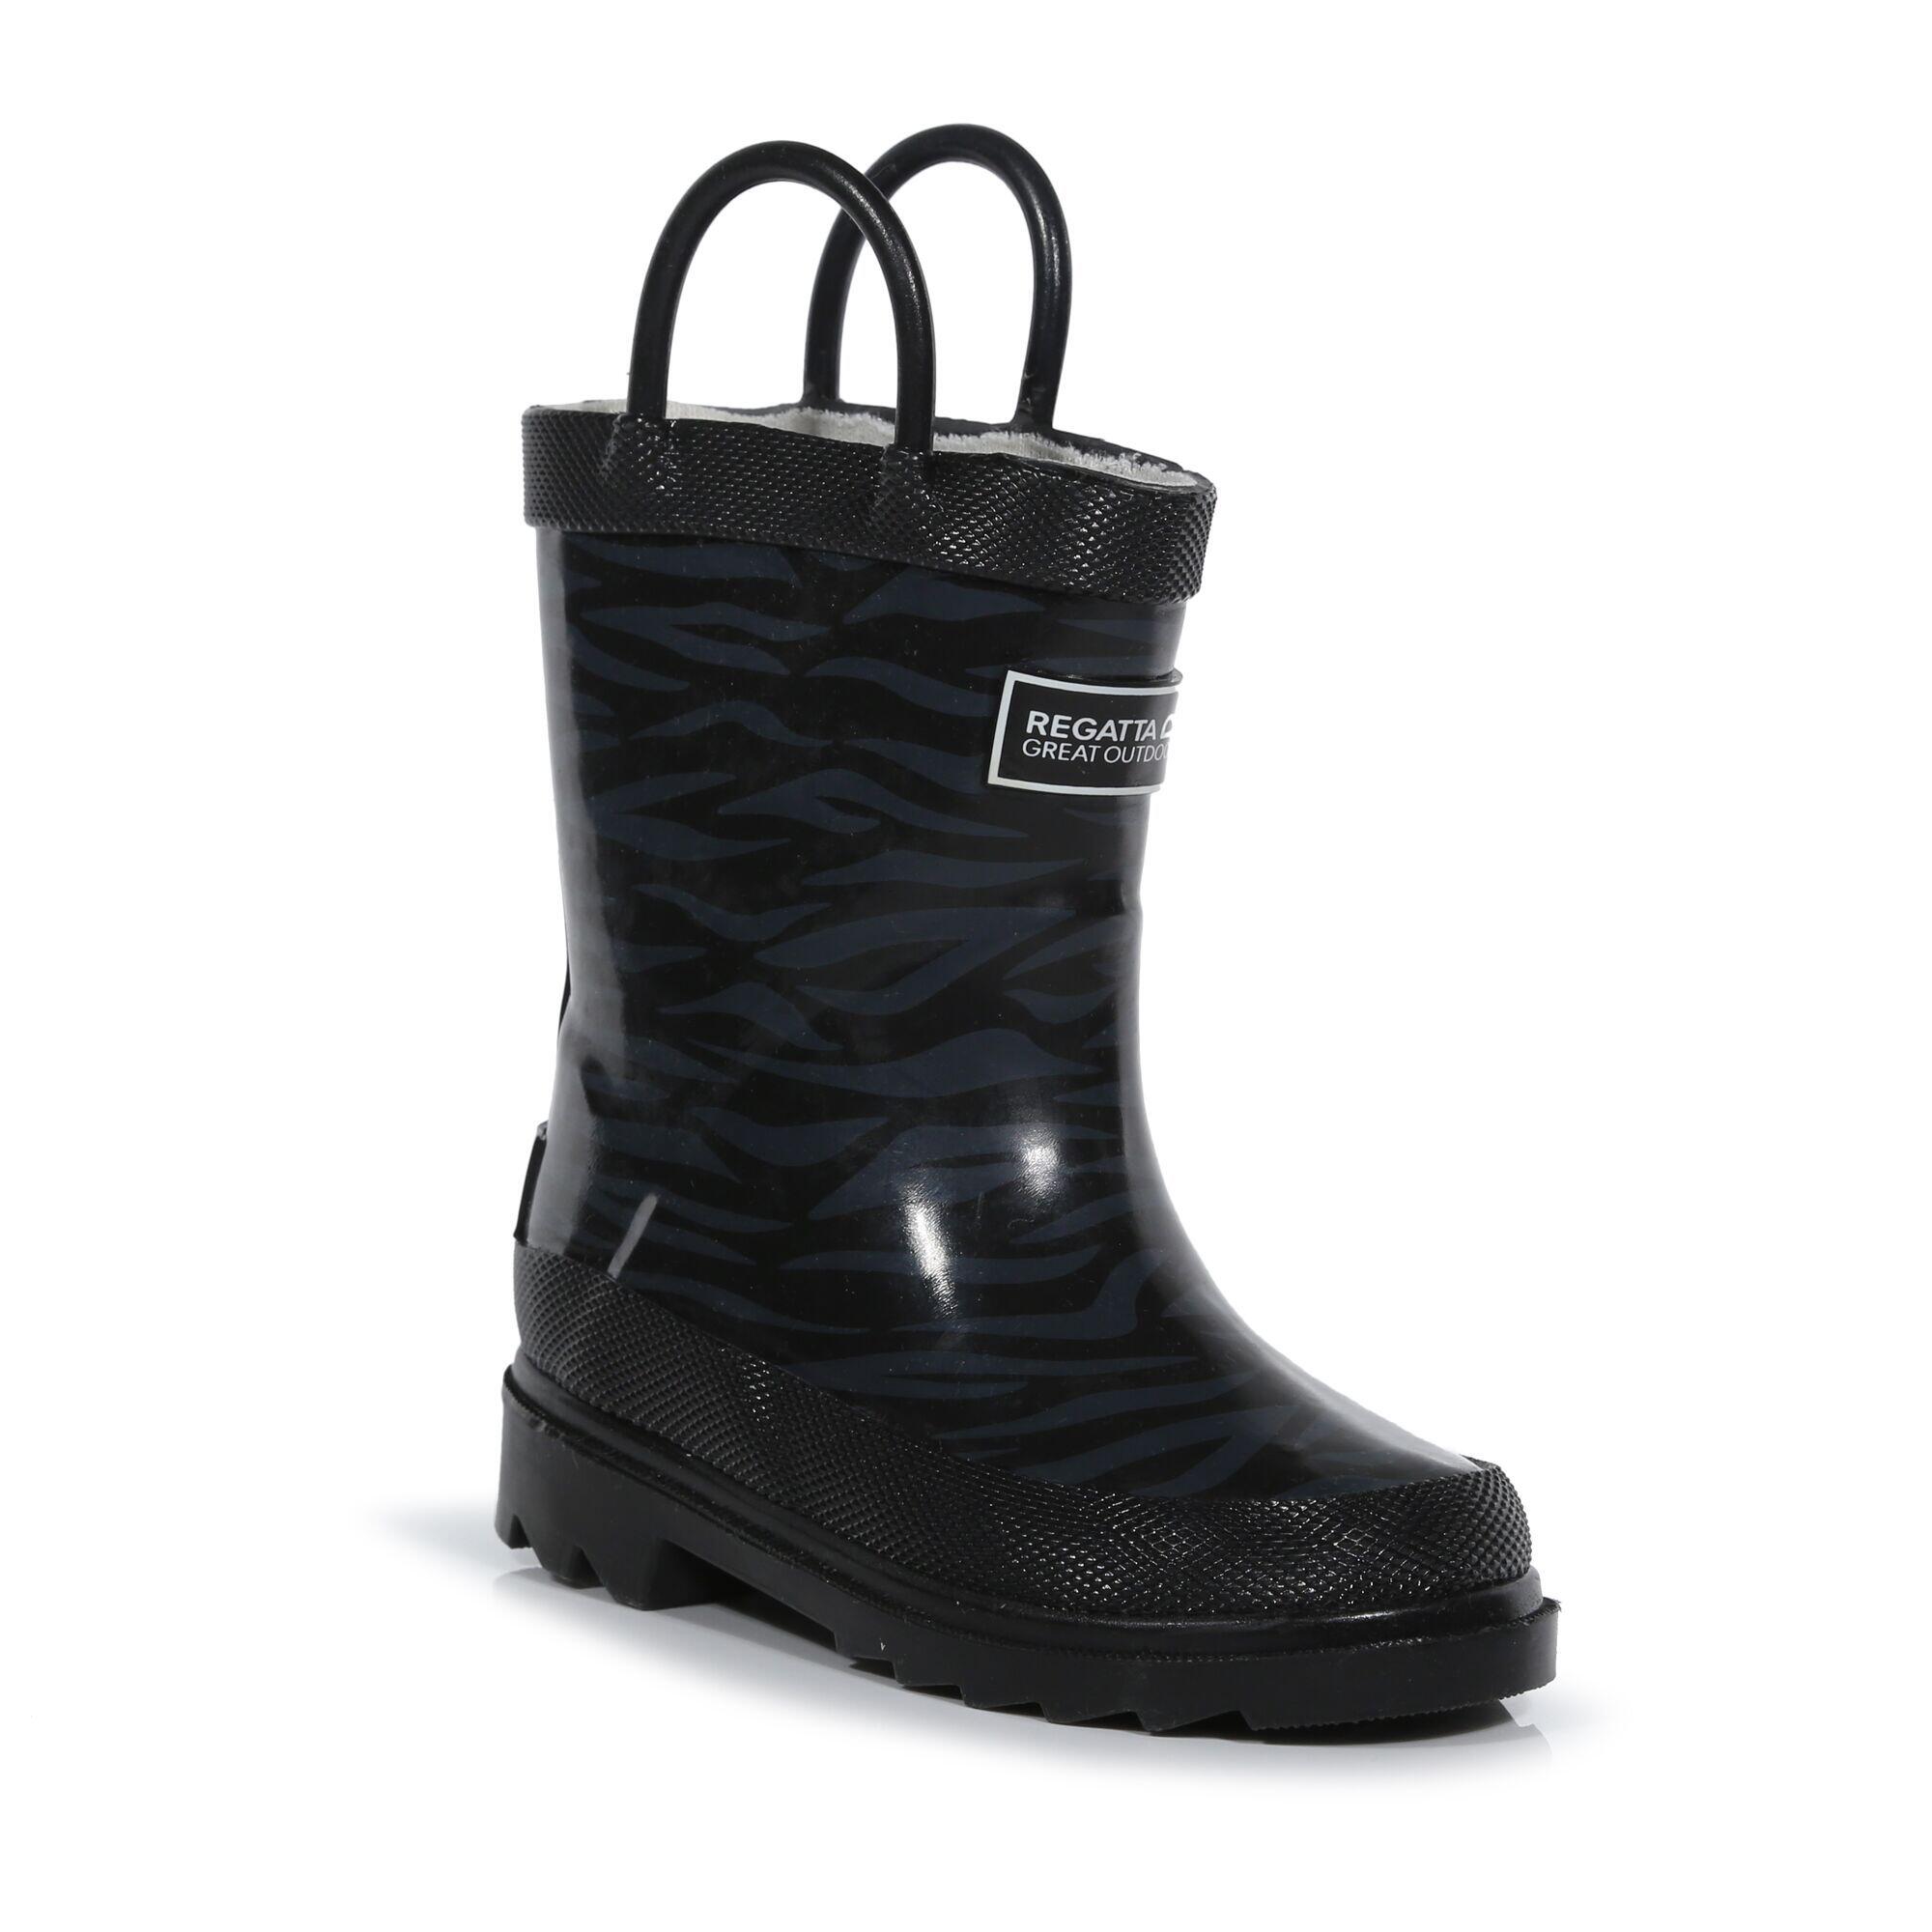 REGATTA Great Outdoors Childrens/Kids Minnow Patterned Wellington Boots (Black)